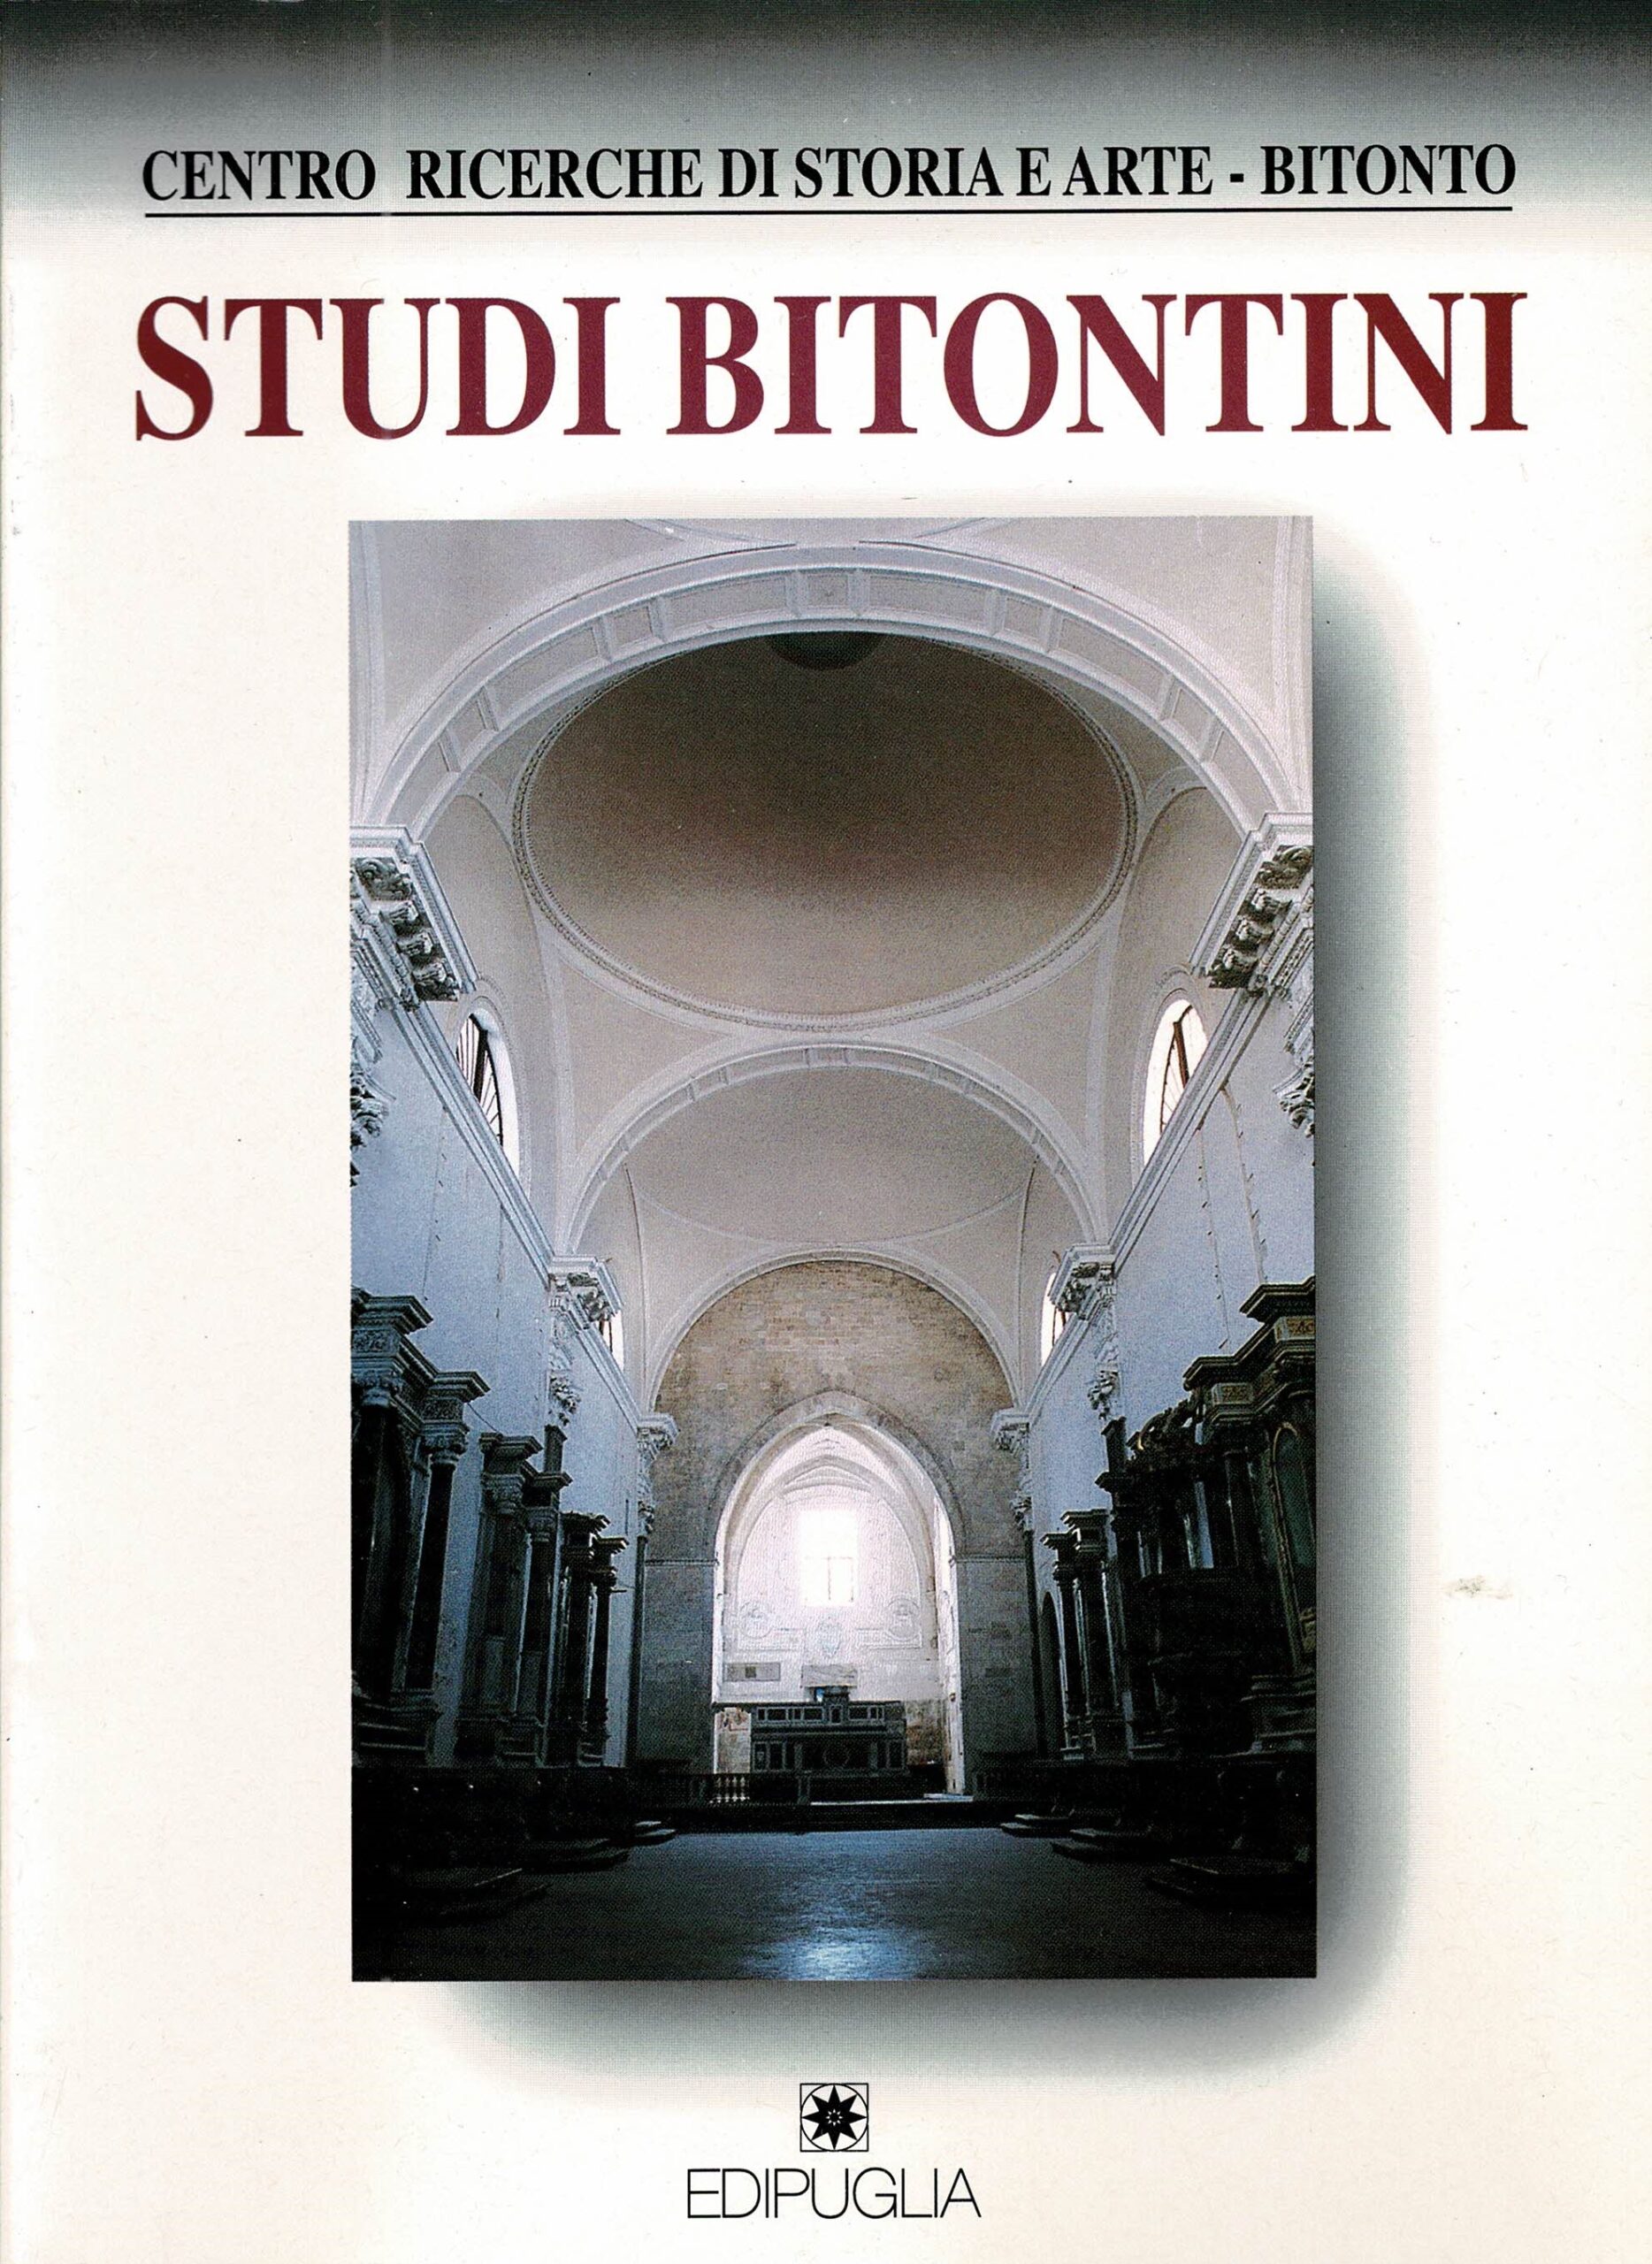 Studi Bitontini